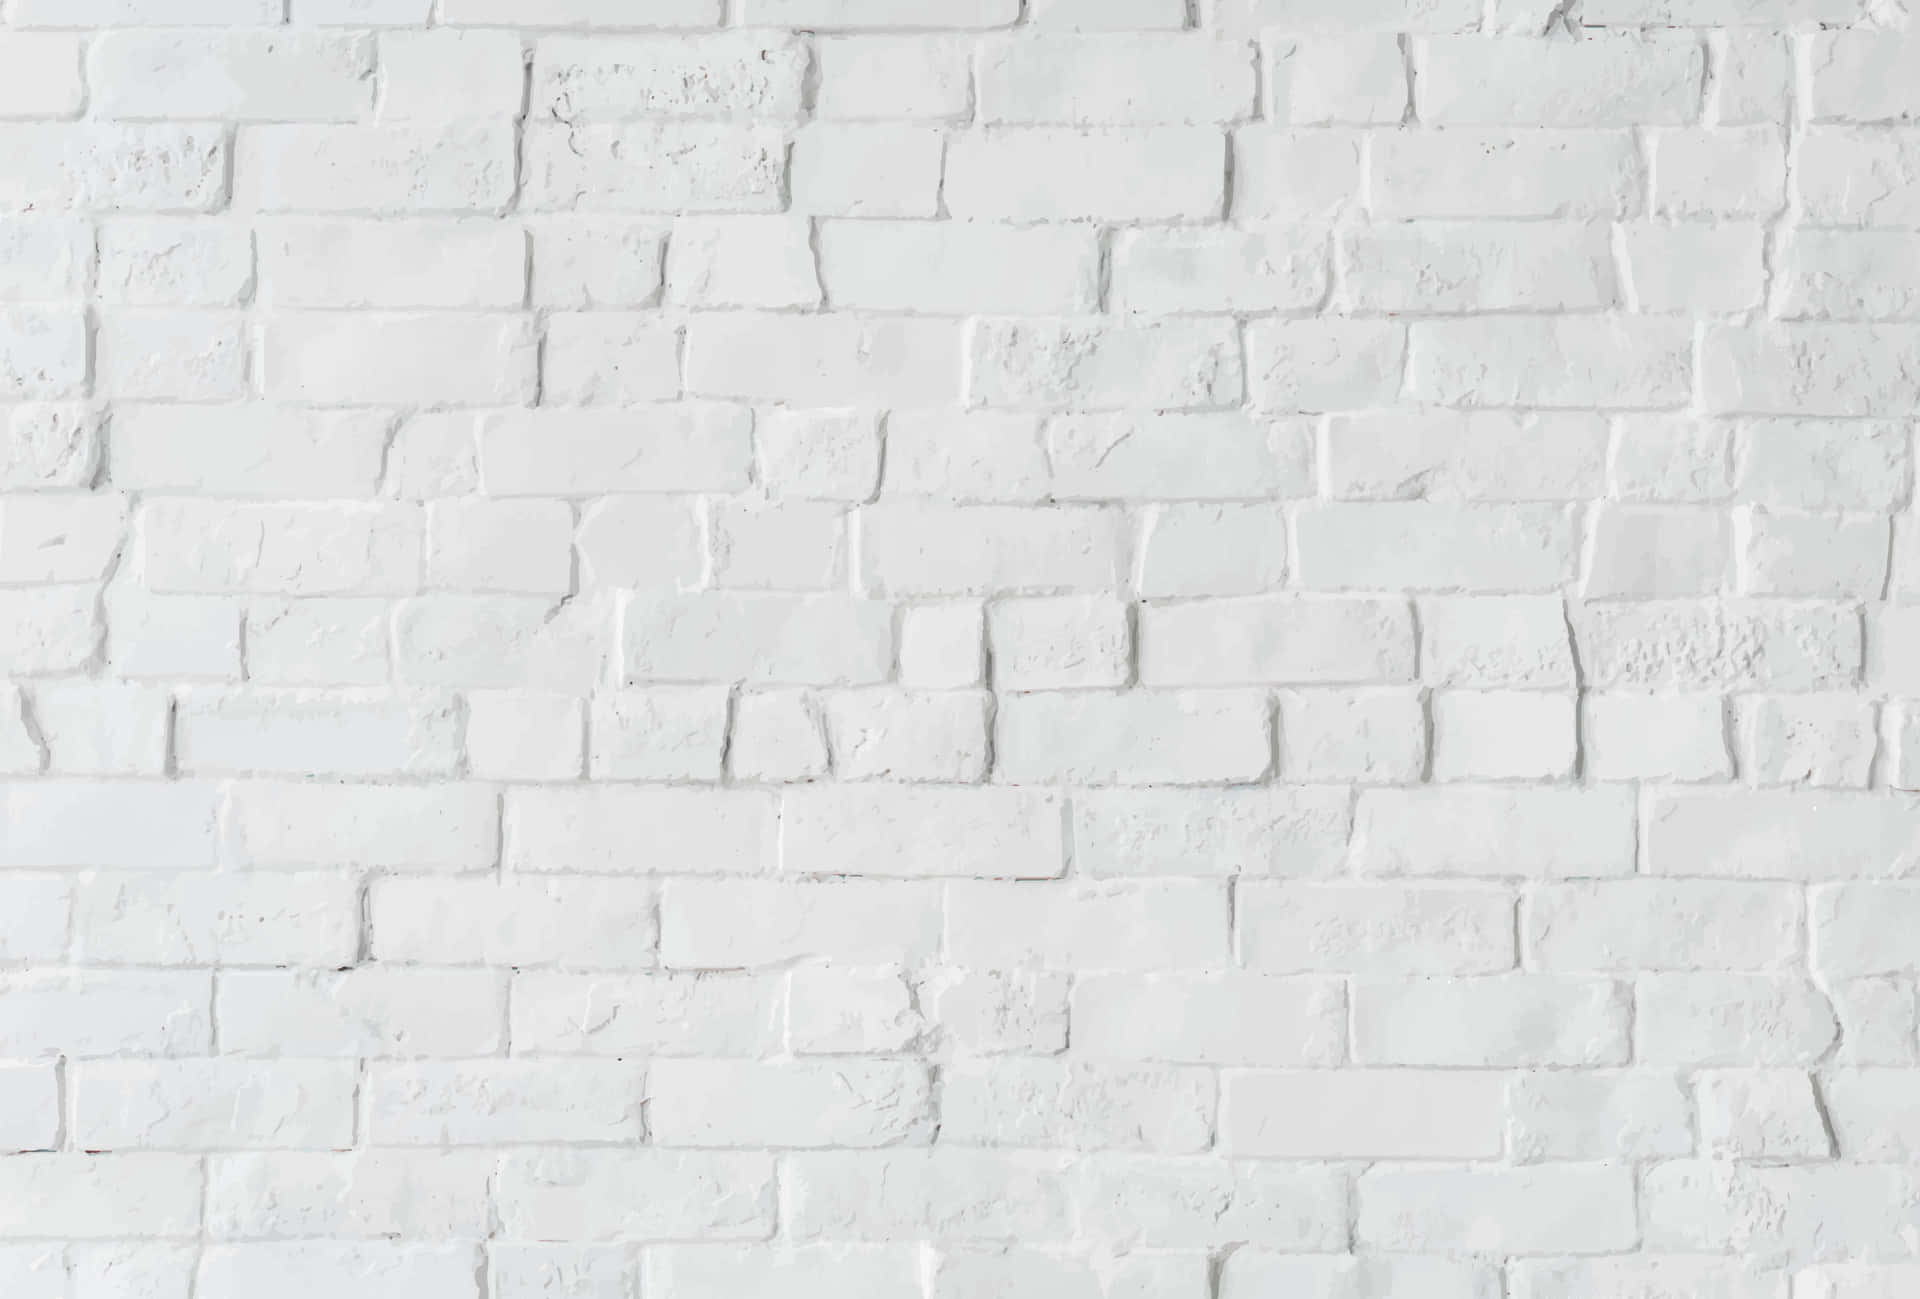 Abstract White Brick Wall Pattern